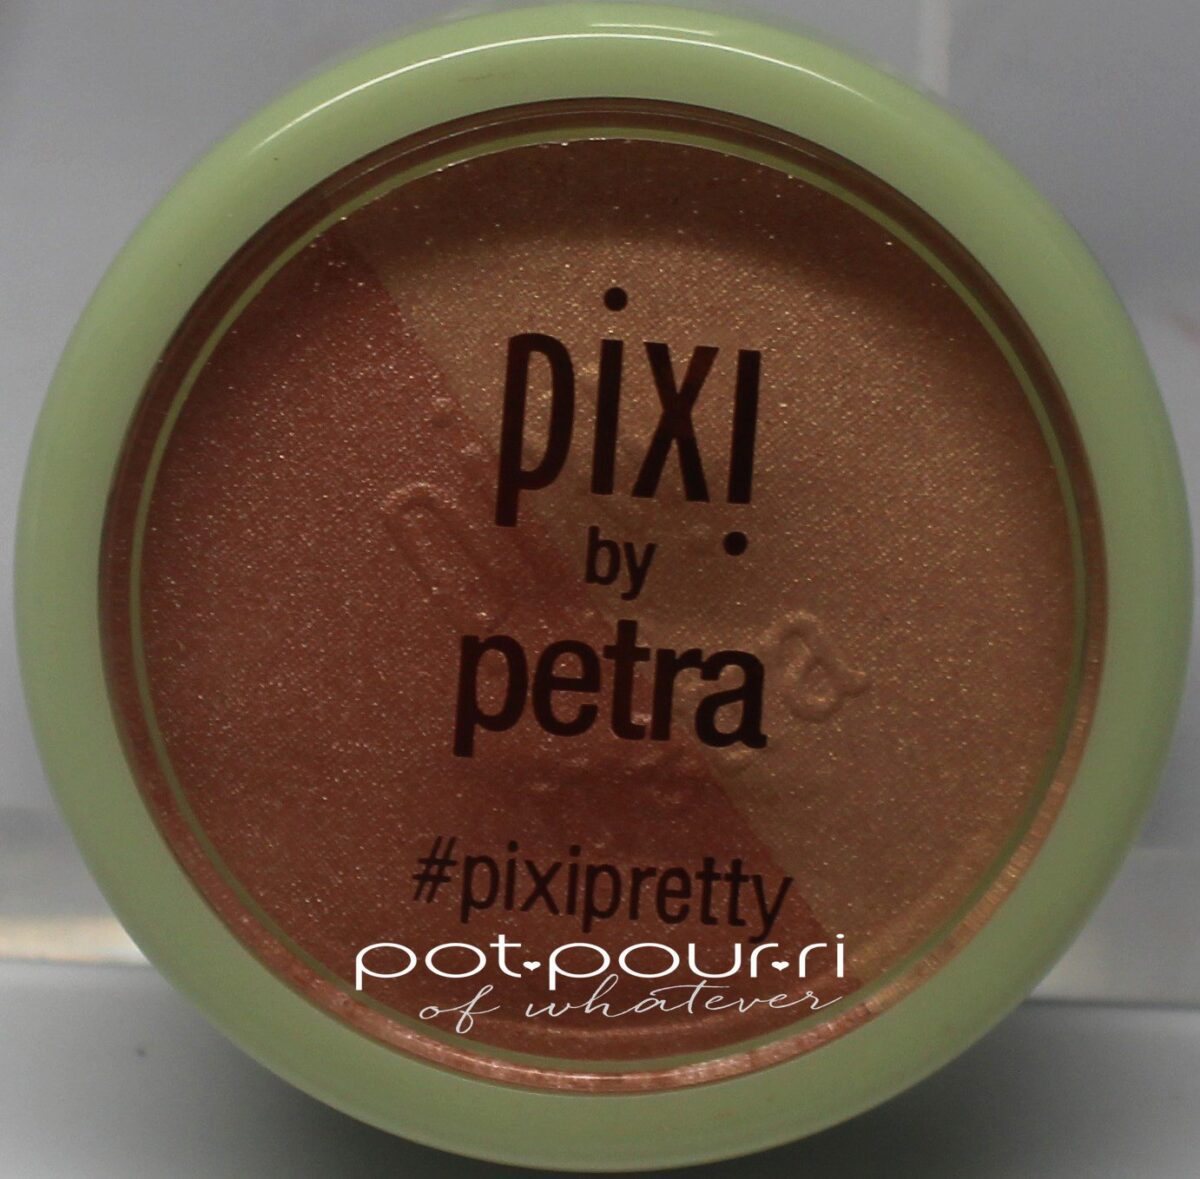 Ipsy-pixy-by-pietry-#Pixi-dual-blush